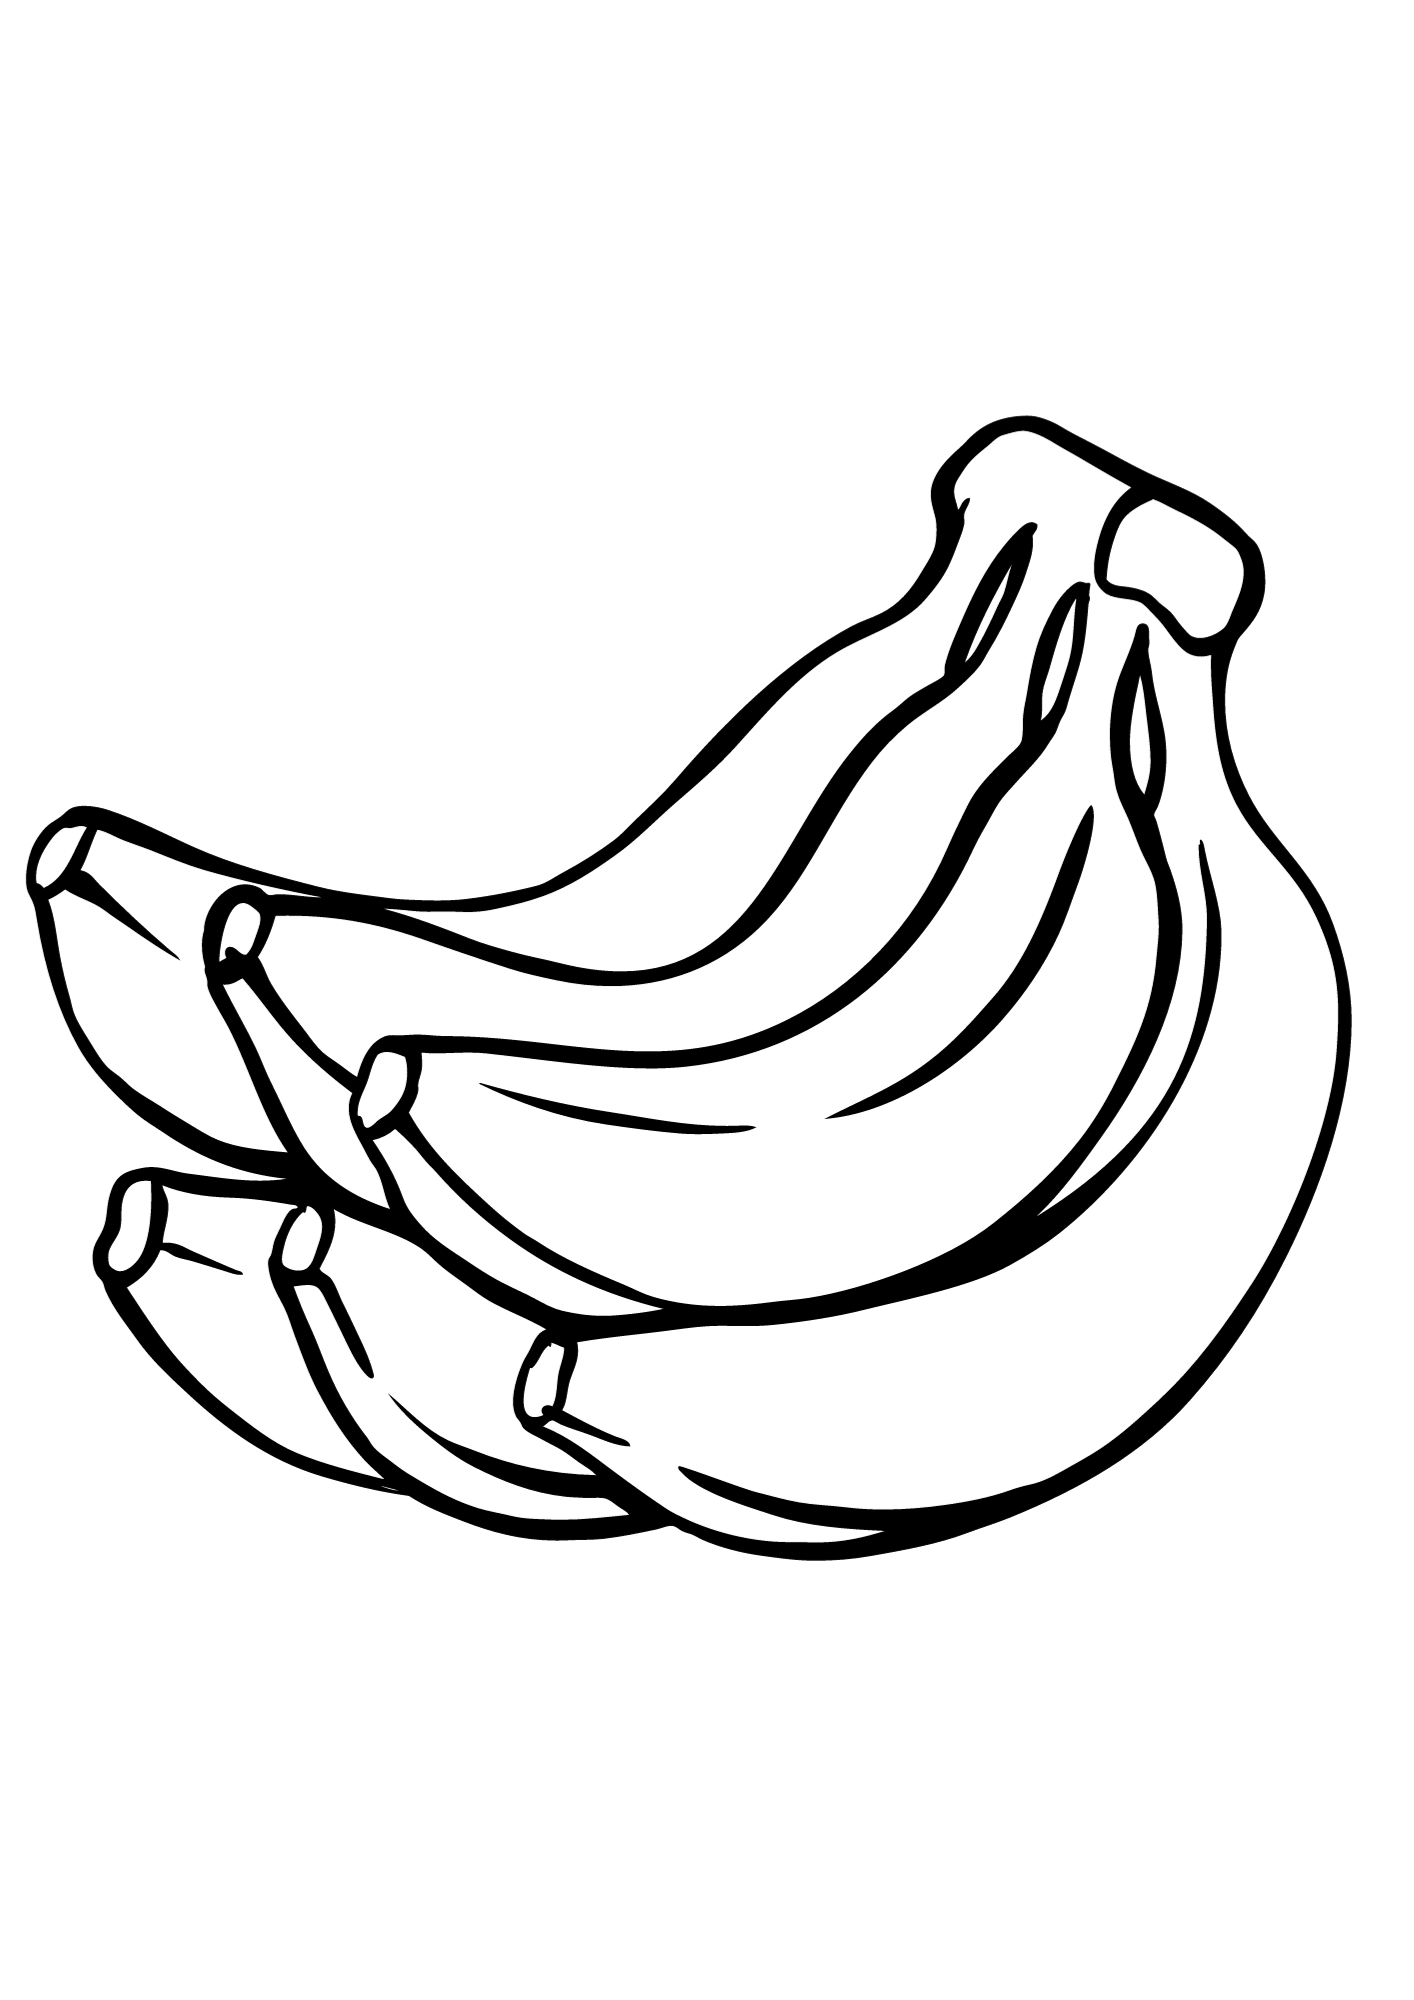 Bananas Printable Coloring Pages